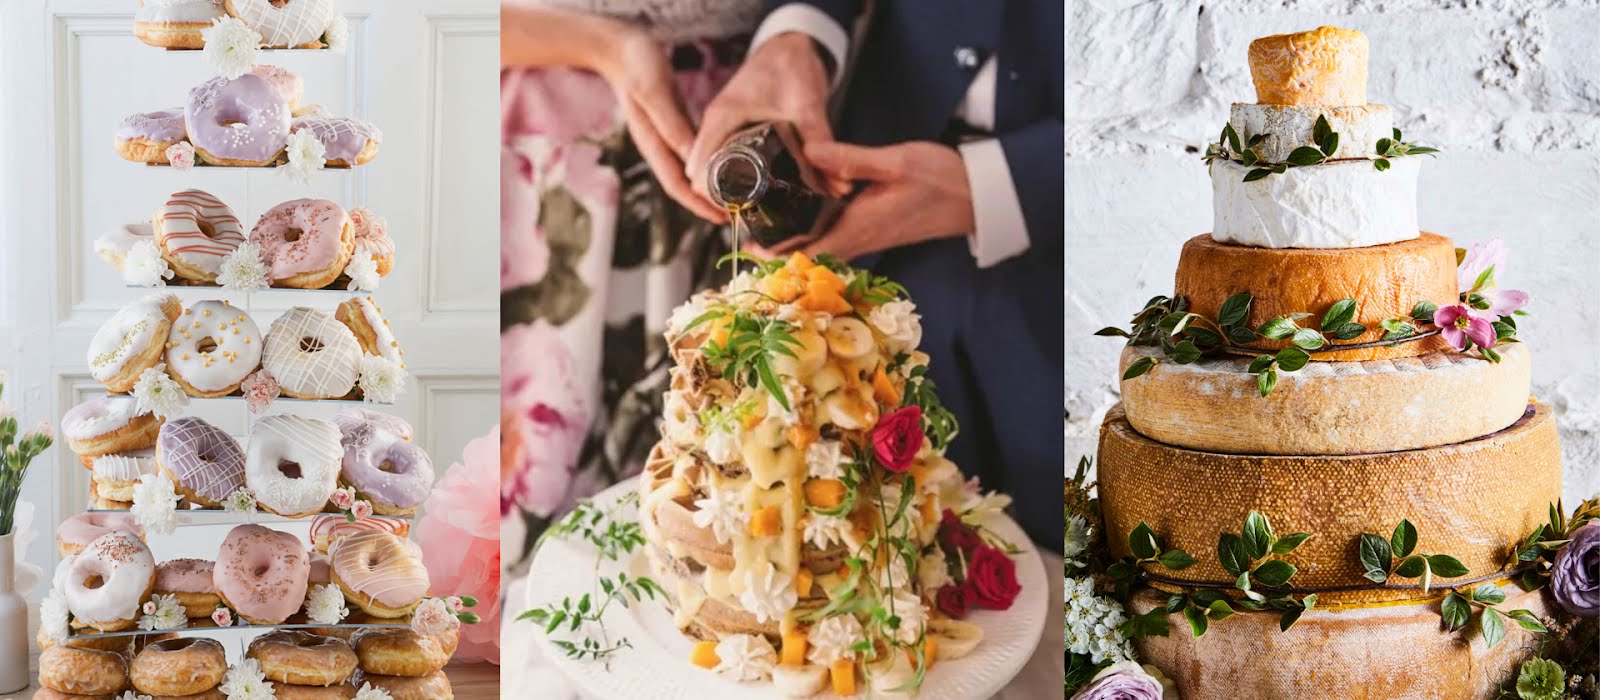 10-creative-alternatives-to-wedding-cake